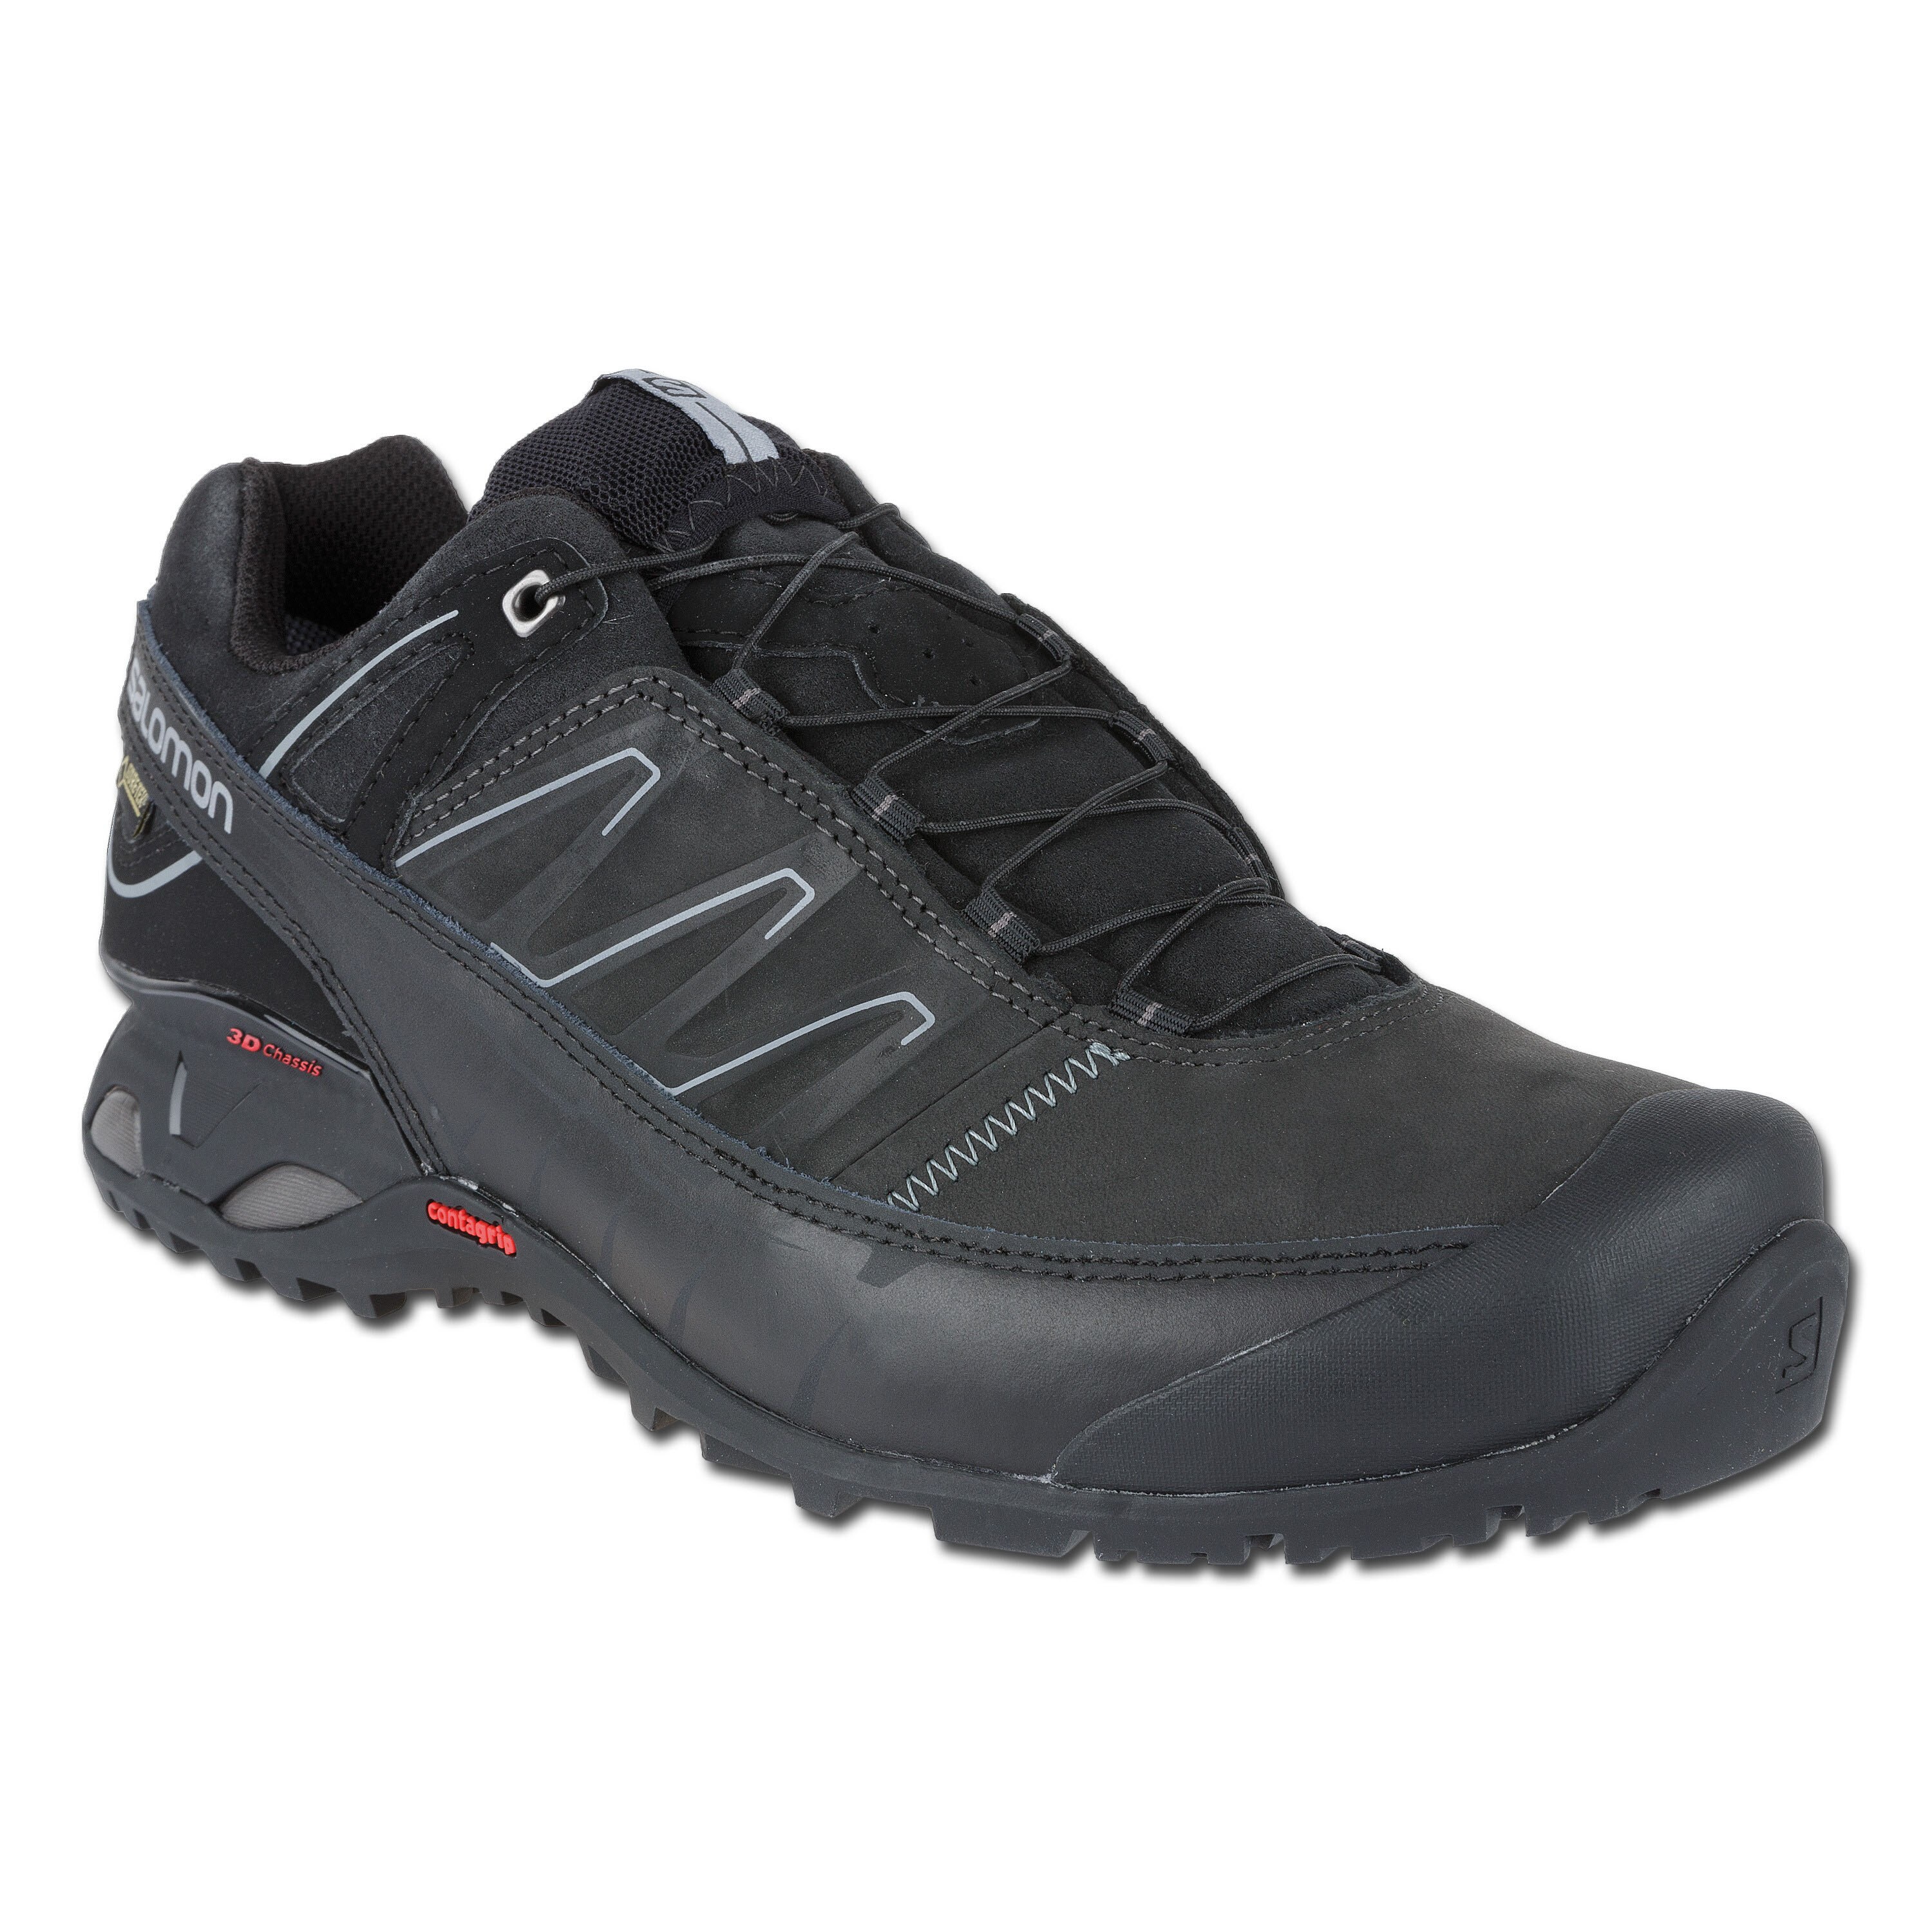 Shoes X Over LTR GTX black | Salomon X Over LTR GTX black | Hiking Shoes | Shoes | | Clothing